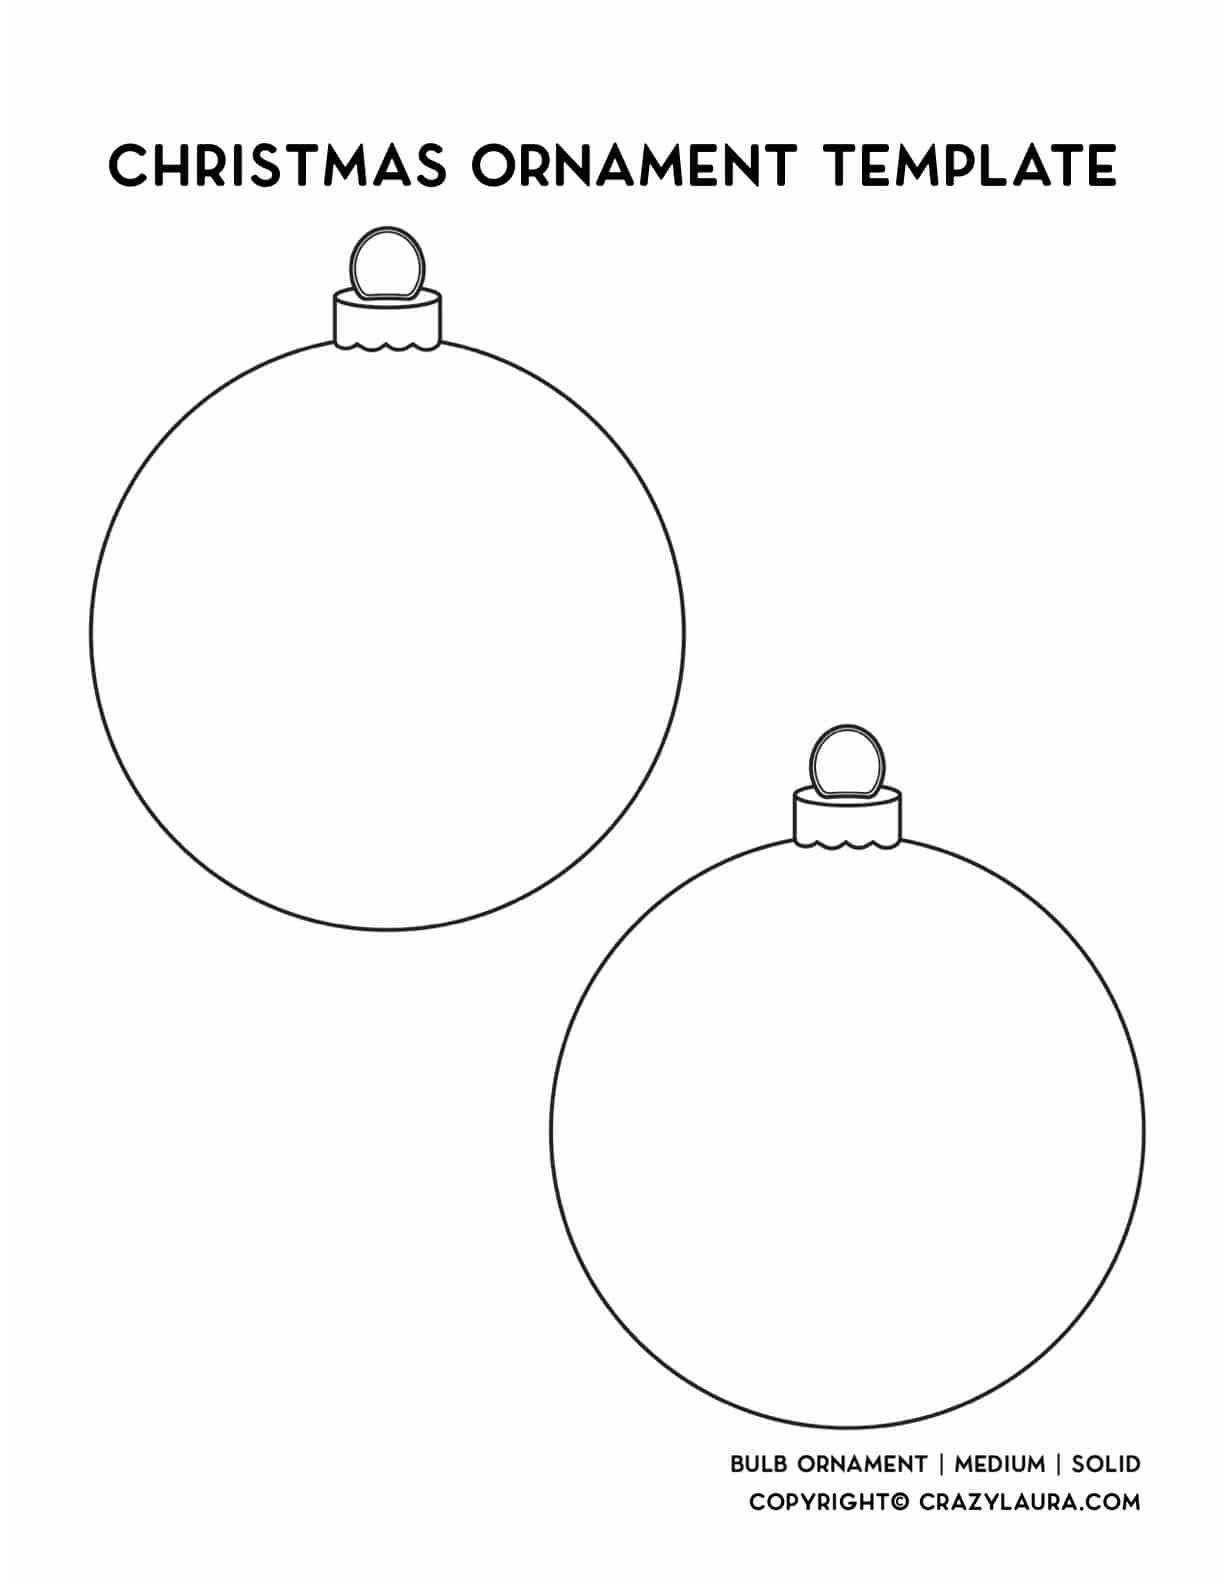 medium sized circle christmas bulb template